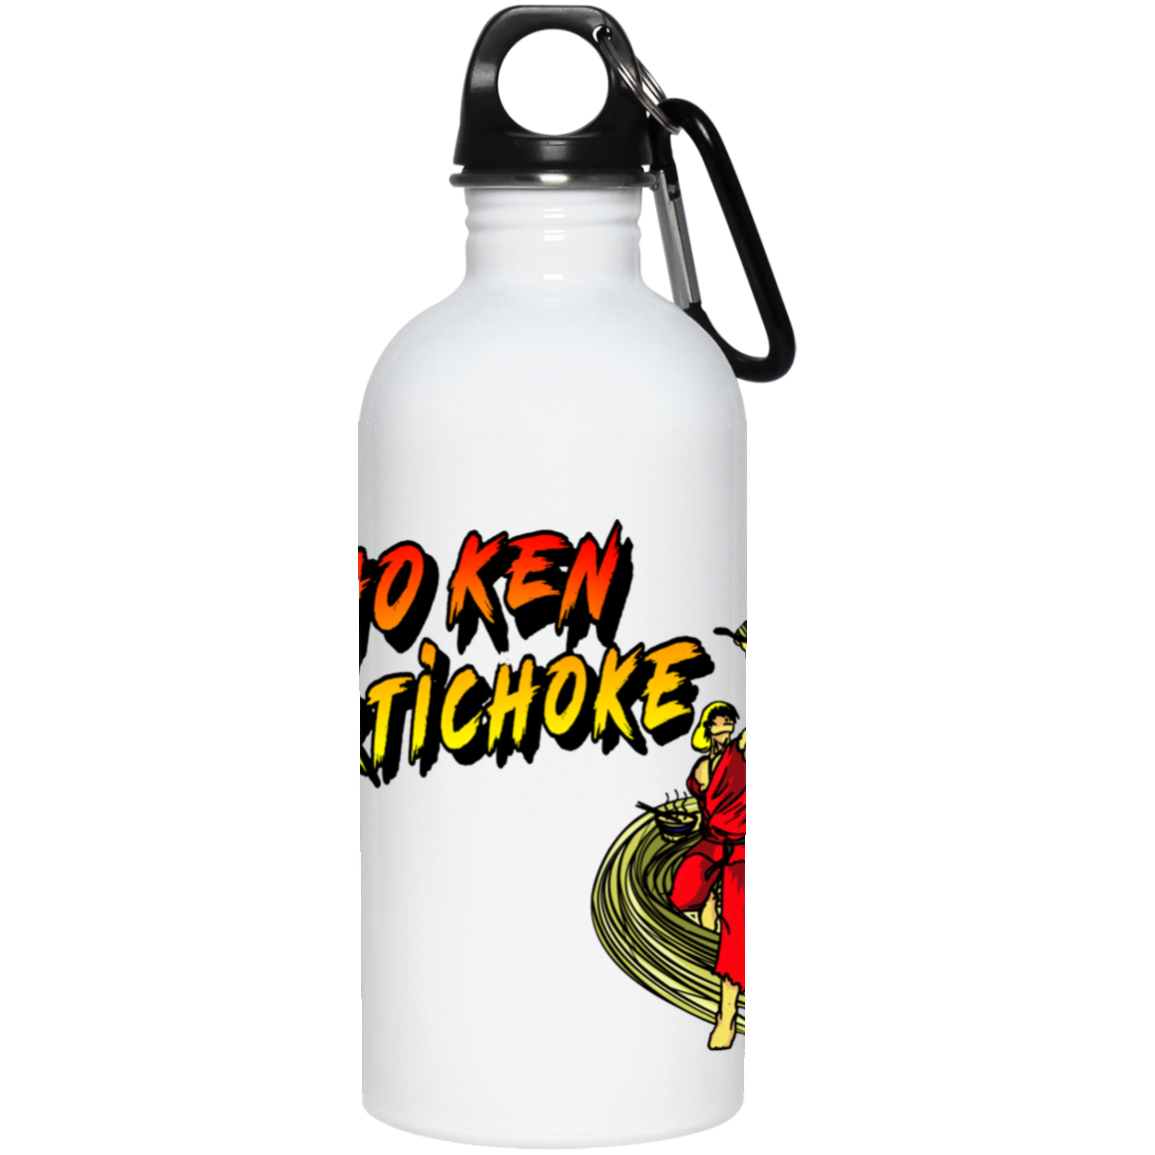 ArtichokeUSA Custom Design. Pho Ken Artichoke. Street Fighter Parody. Gaming. 20 oz. Stainless Steel Water Bottle